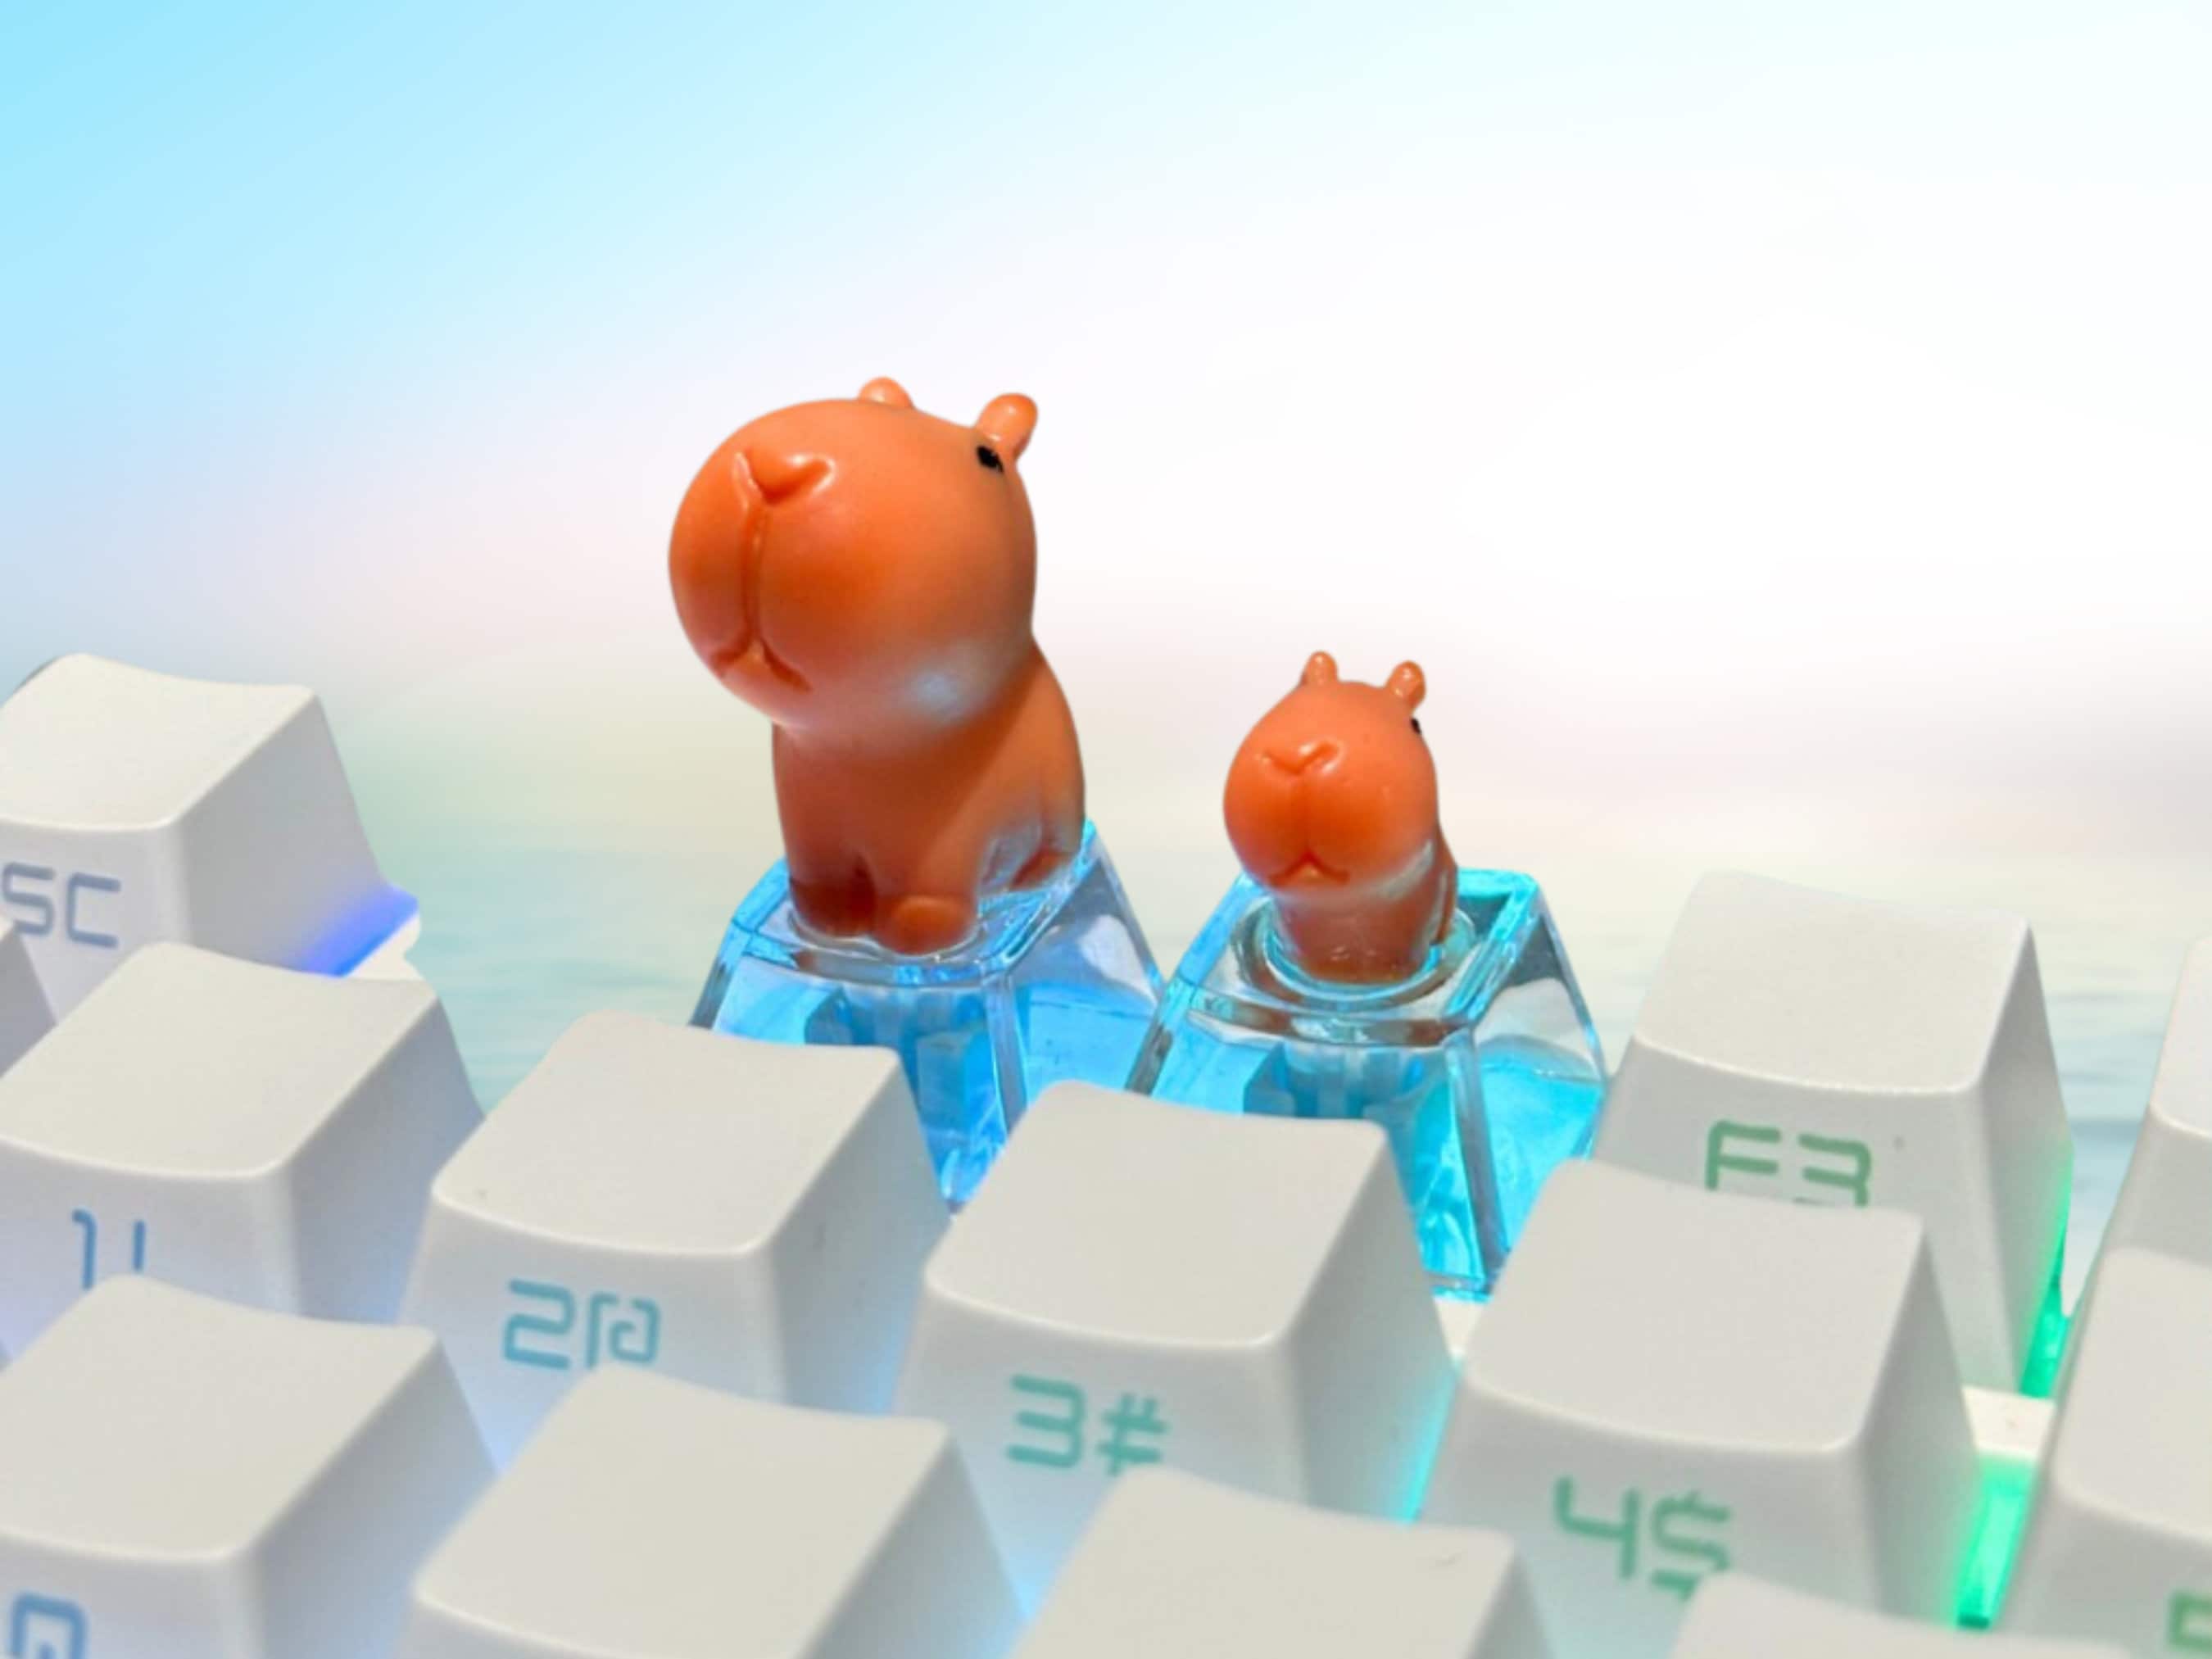 Capybara Keycap, Funny Keycap, Artisan Keycap, Keycap for MX Cherry Switches Mechanical Keyboard, Handmade Gift